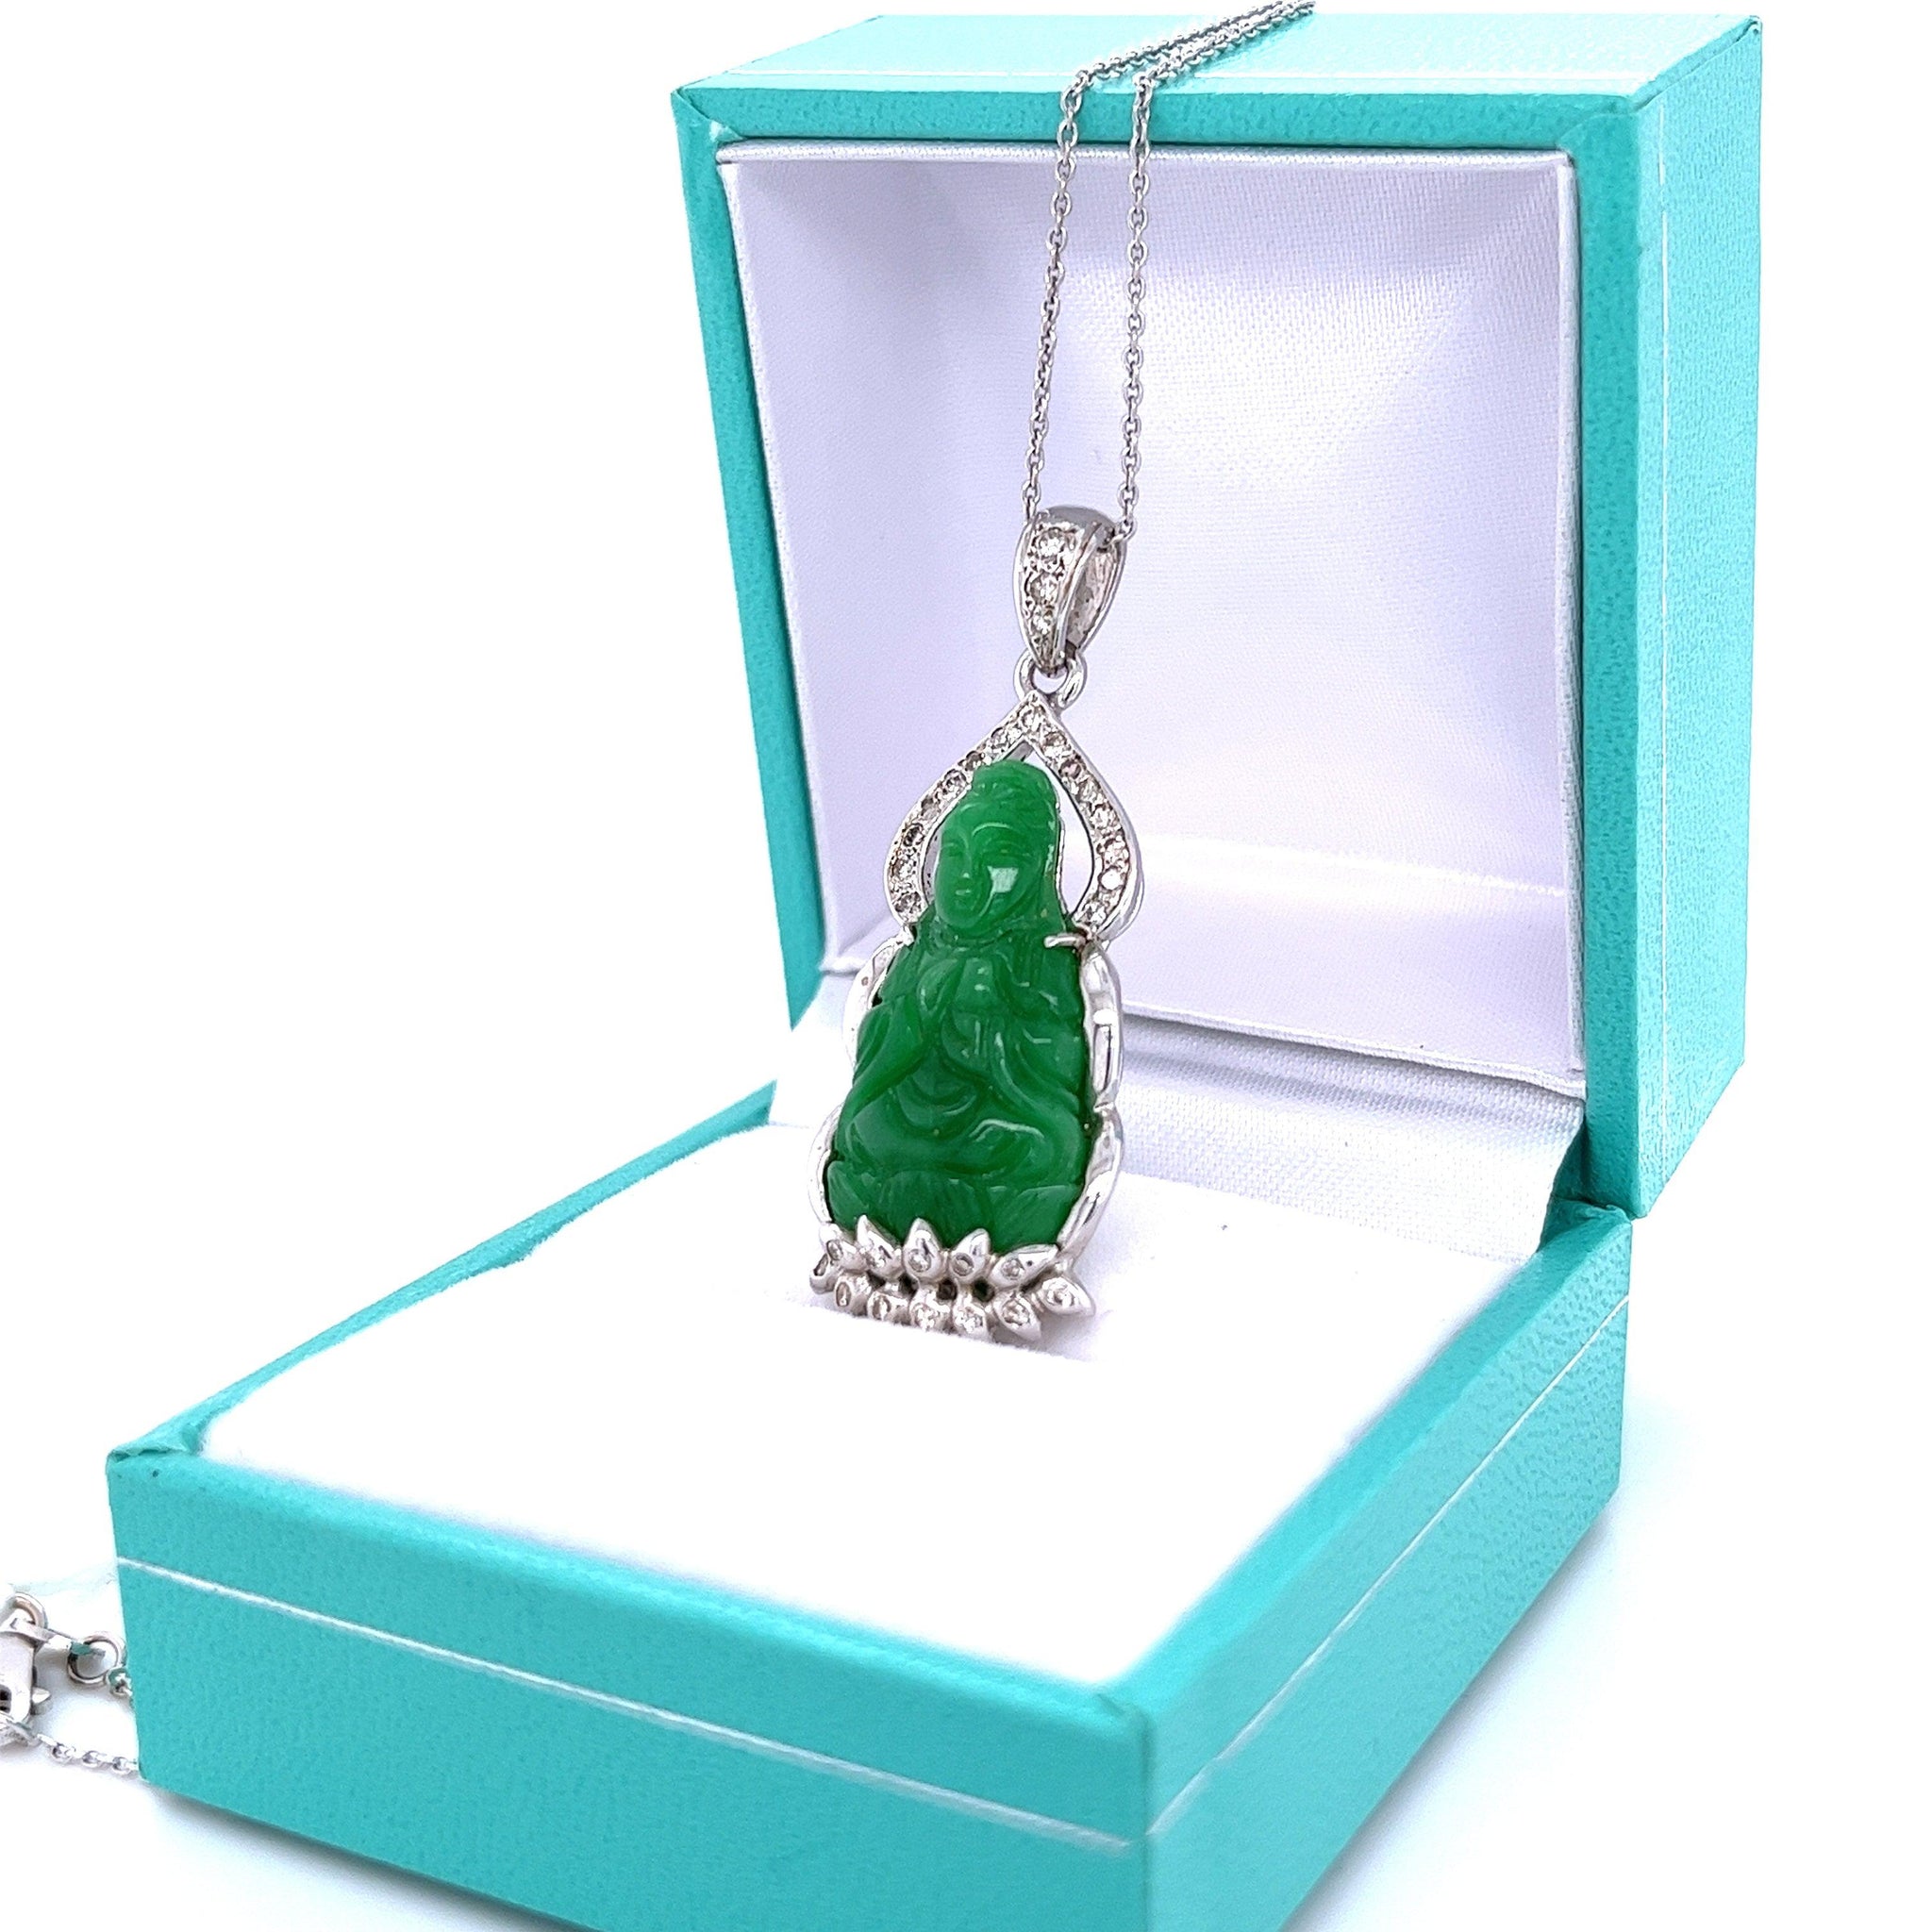 14K White Gold Carved Jade Buddha and Diamond Pendant Necklace-Gemstone Pendant-ASSAY